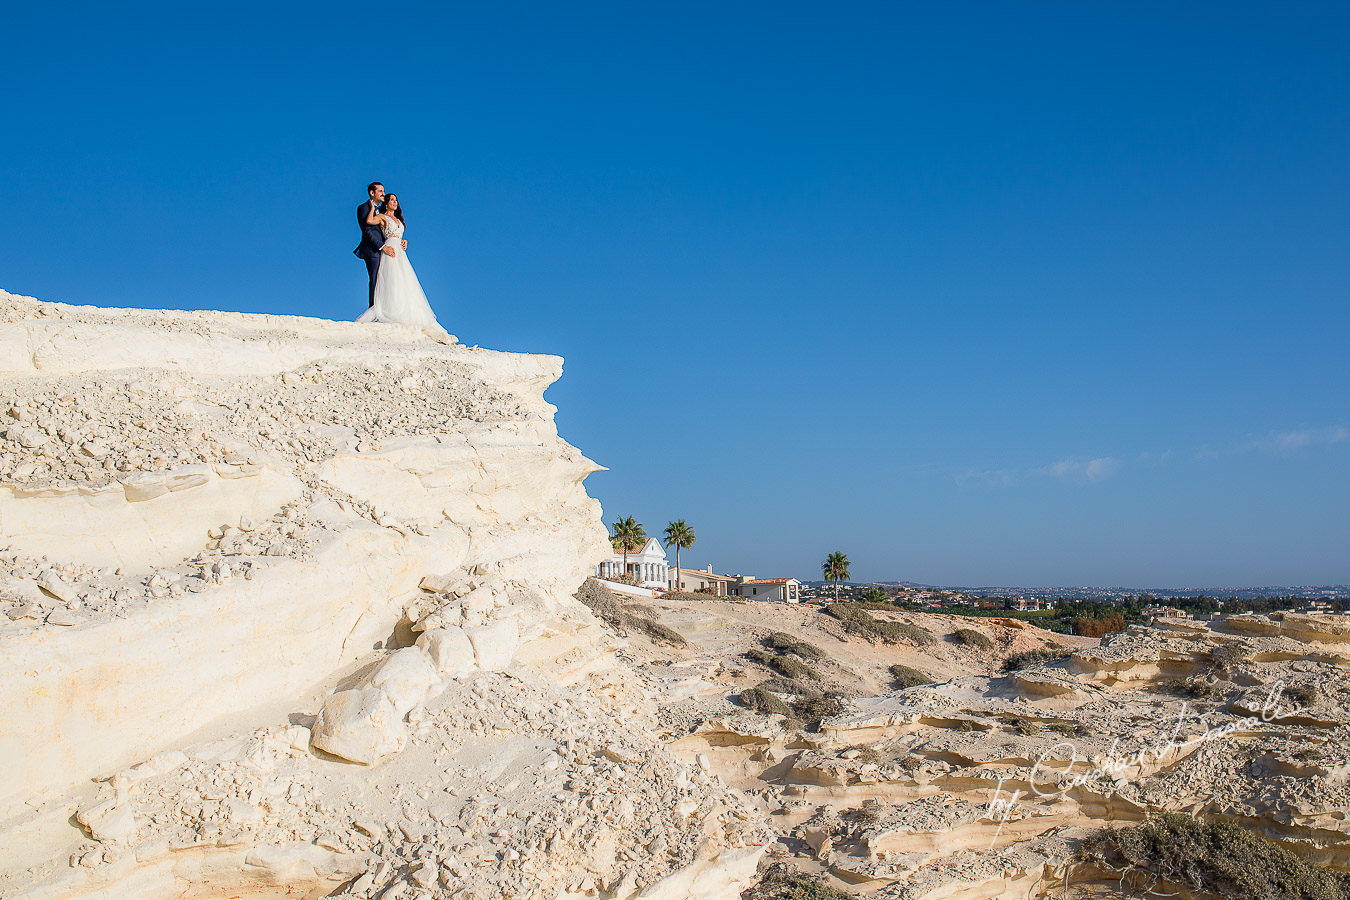 A Stylish Wedding at the Elysium Hotel captured by Cyprus Wedding Photographer Cristian Dascalu.